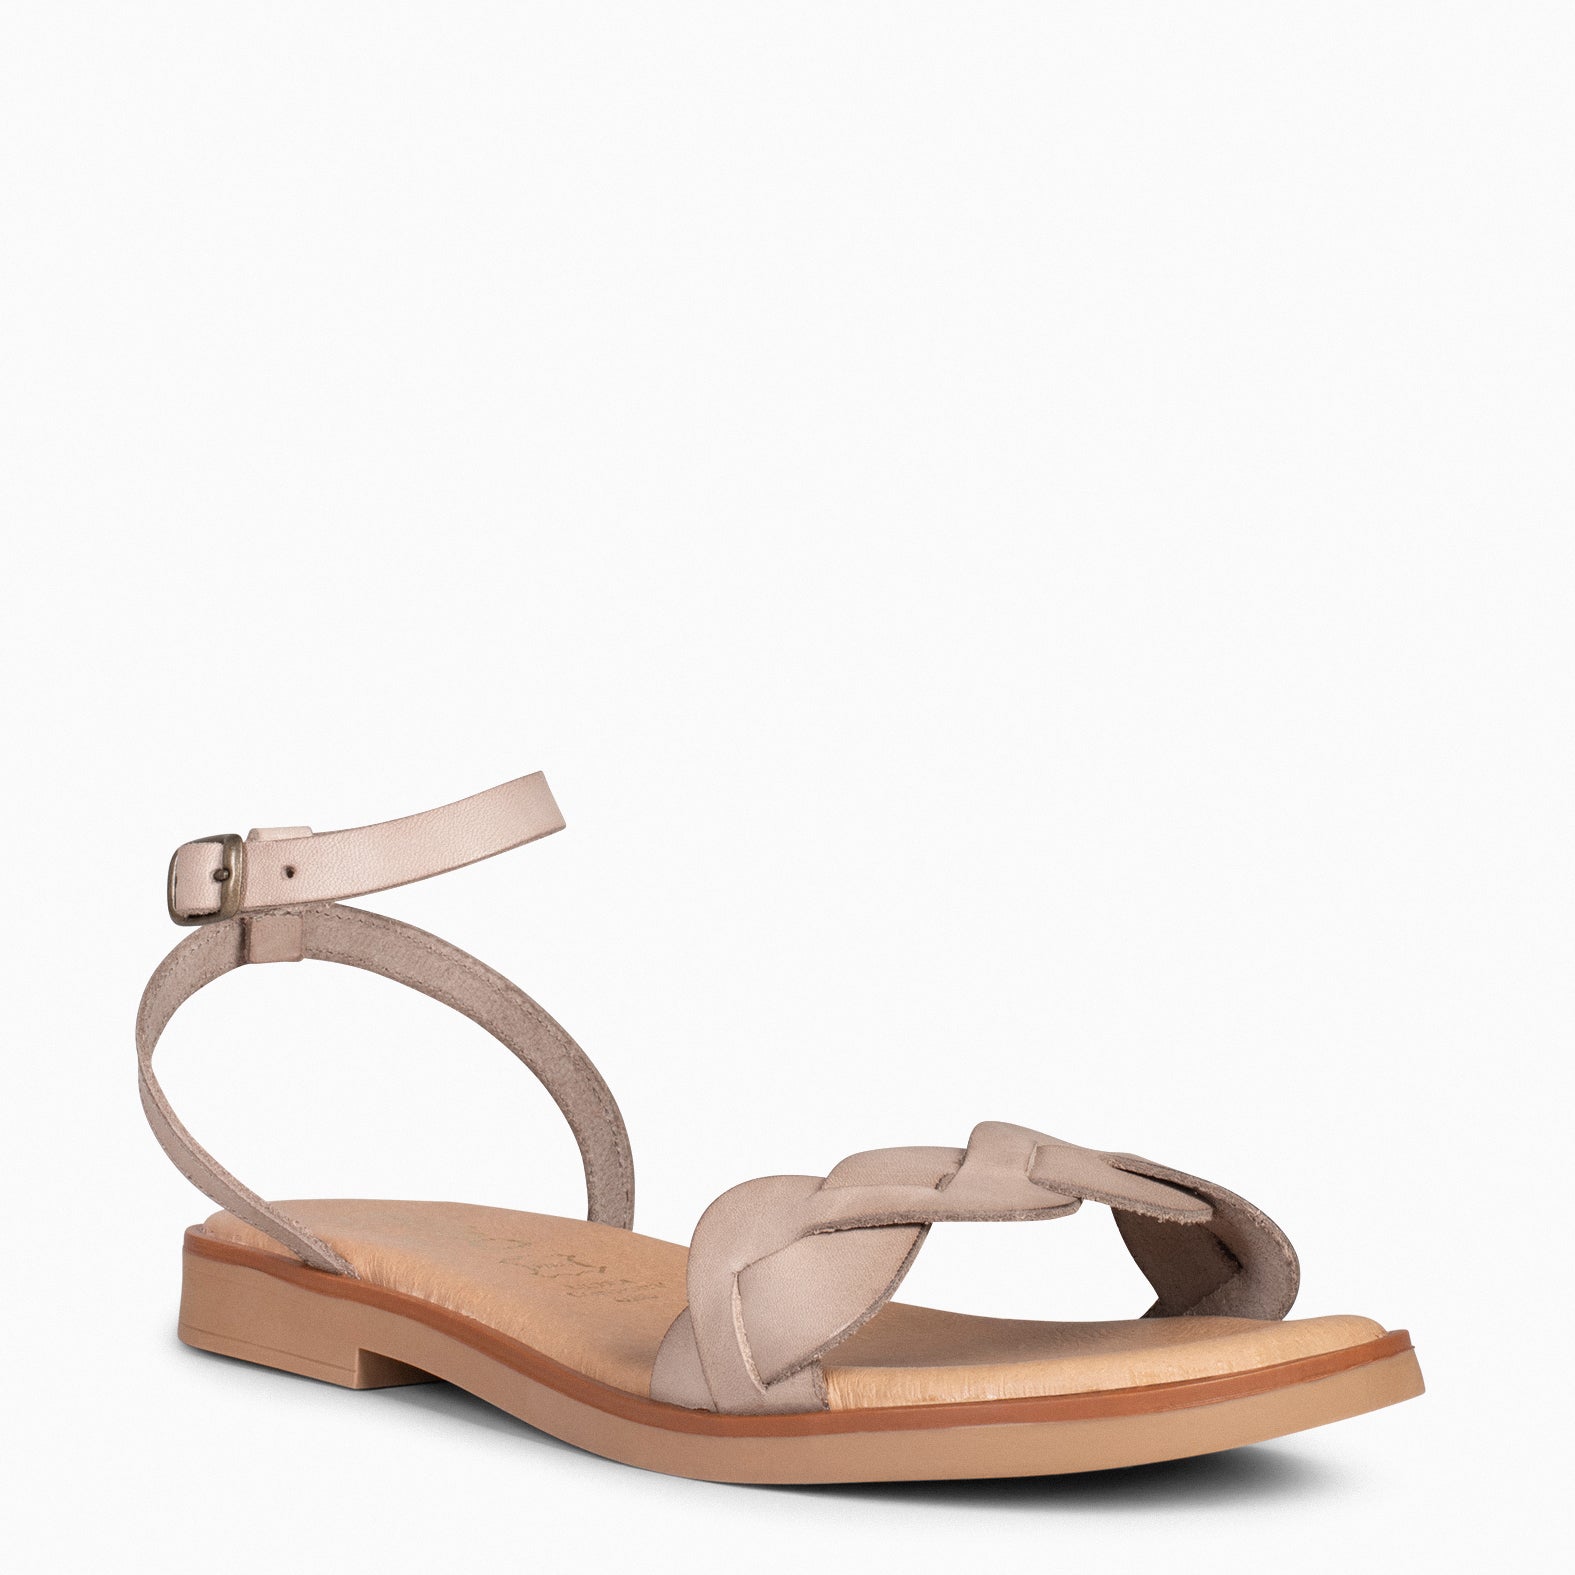 ARECA - TAUPE Women's Flat Sandals